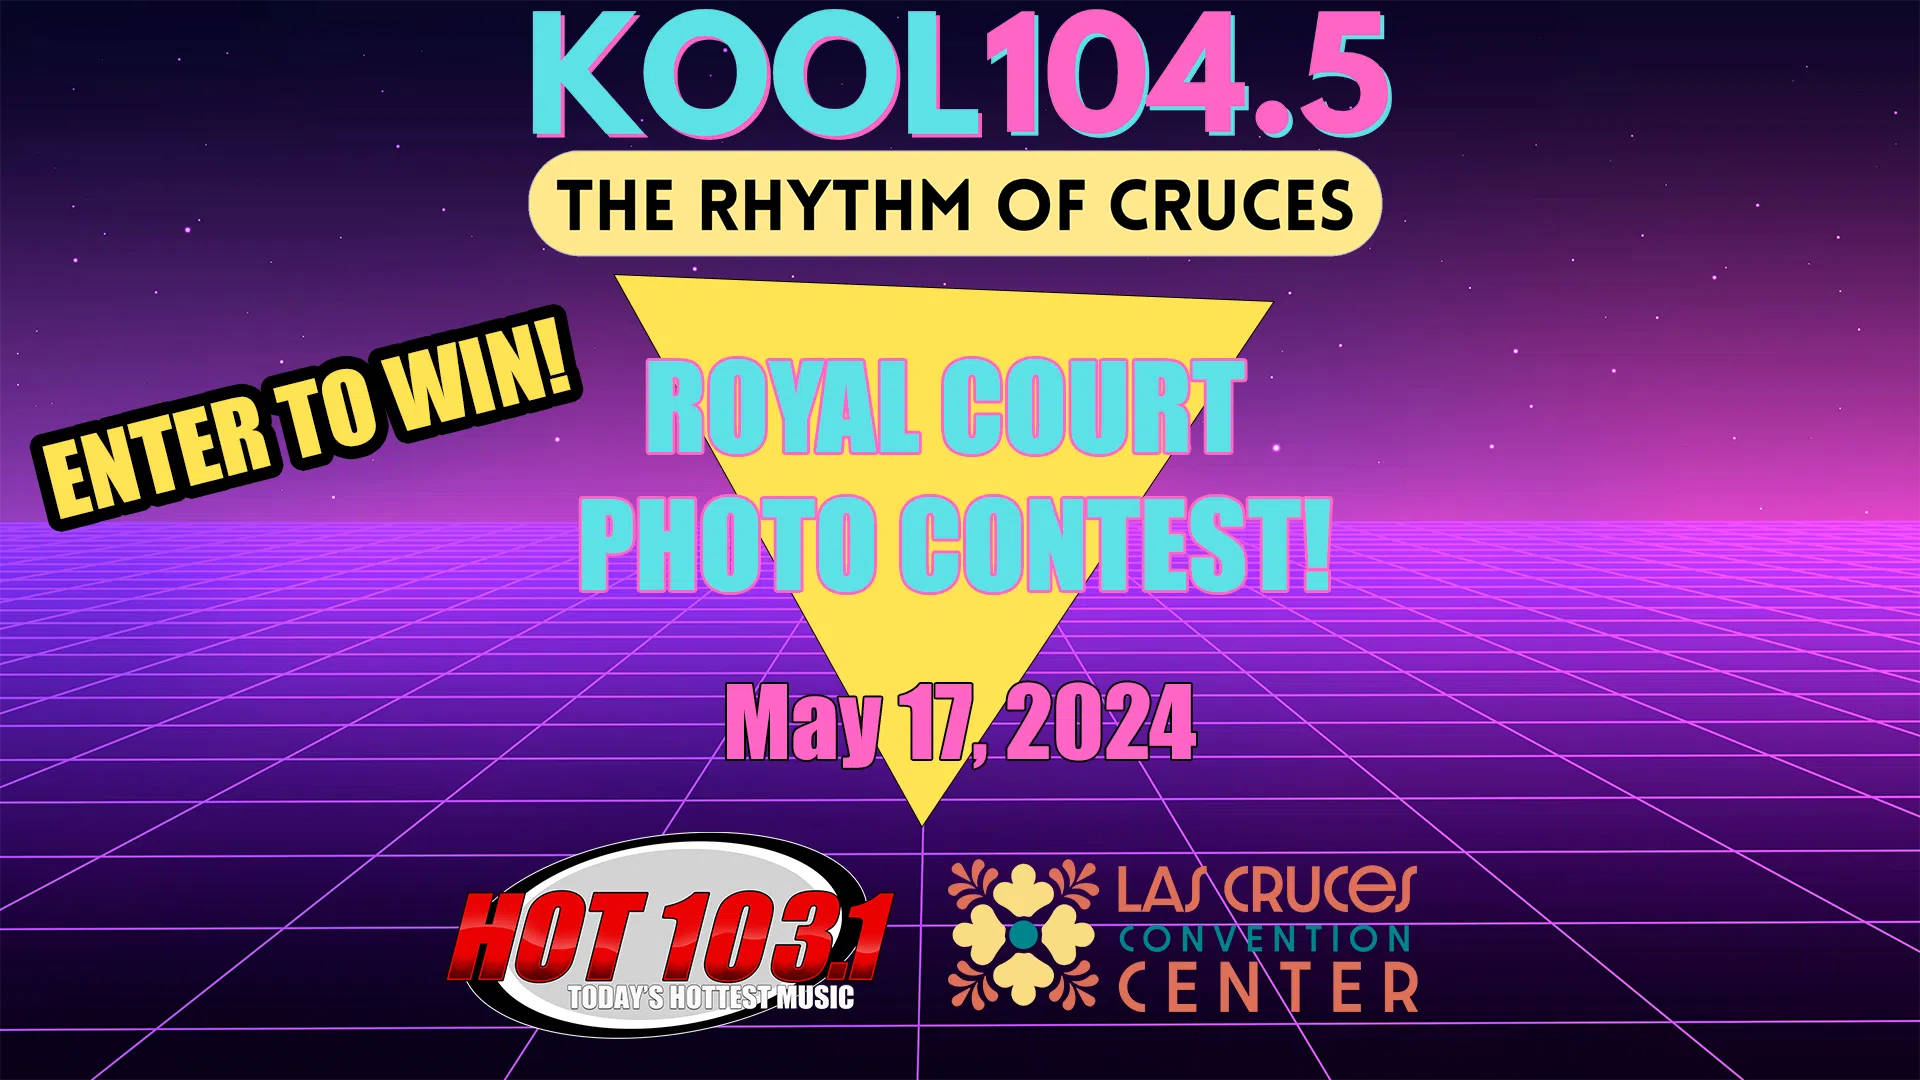 Feature: https://www.1045koolfm.com/win/royal-court-photo-contest/